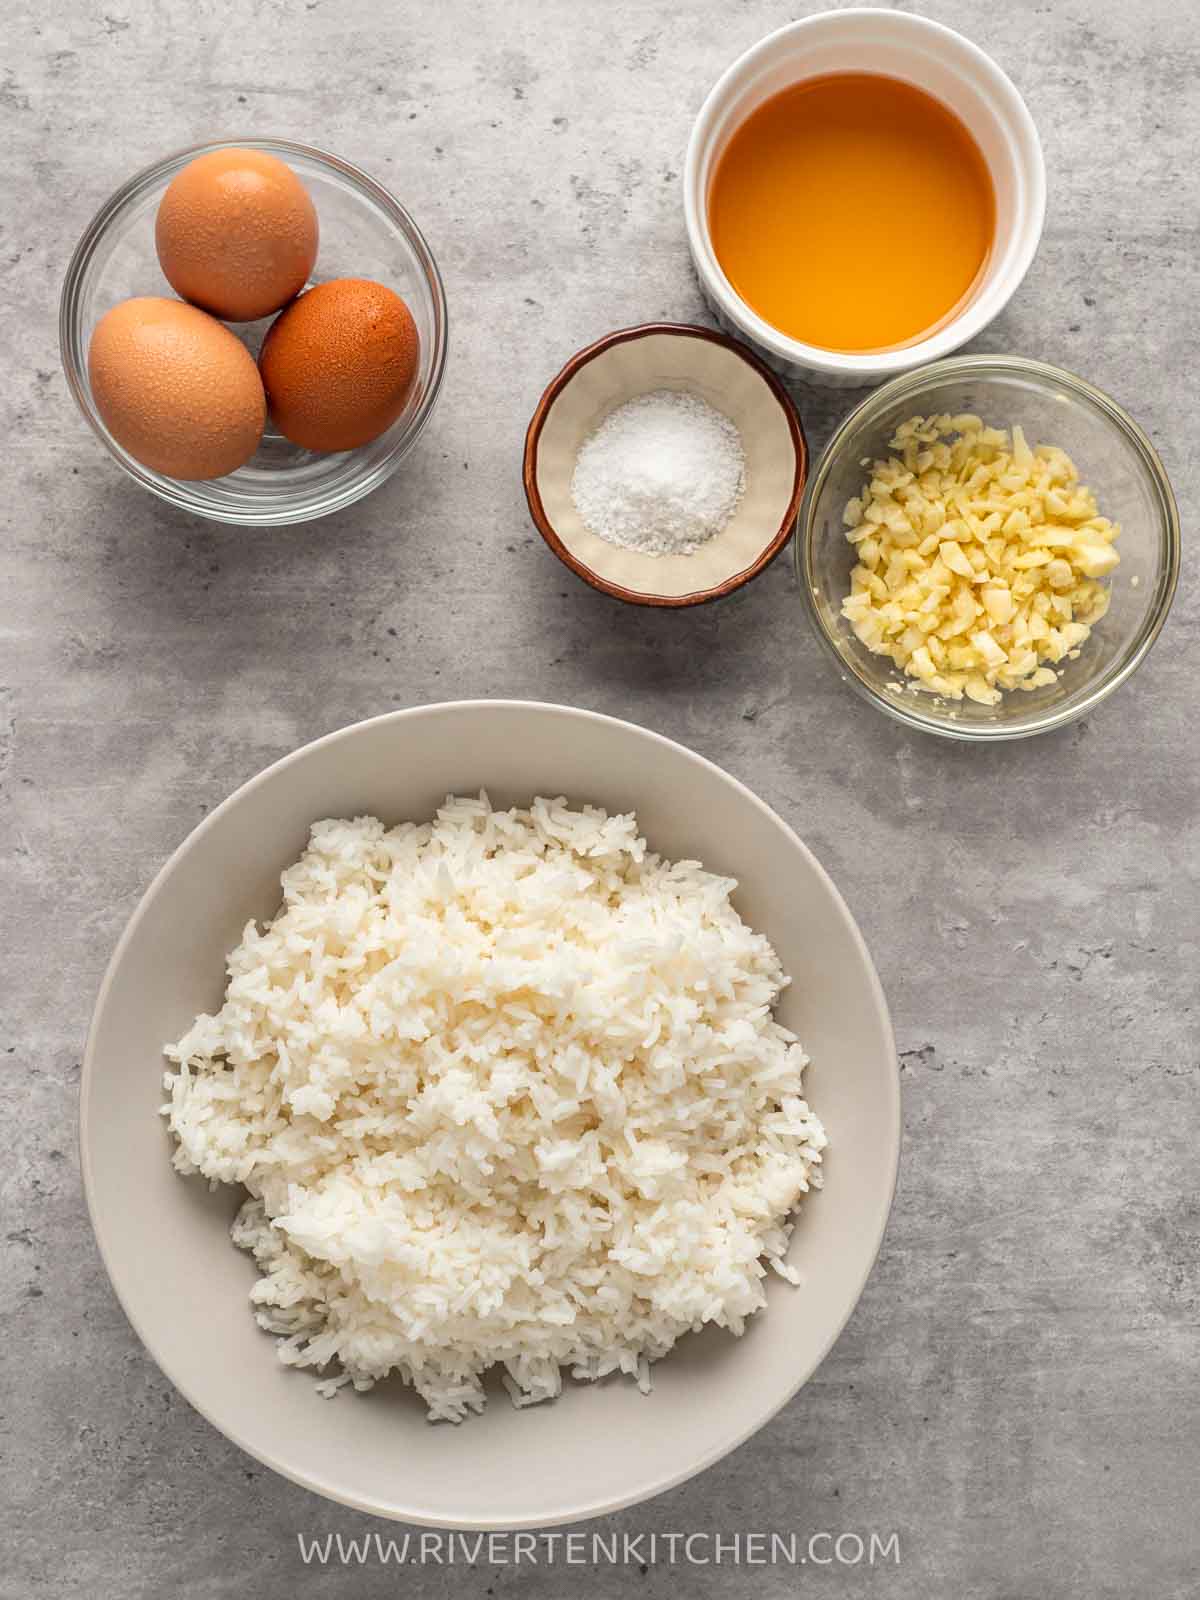 Ingredients: white rice, eggs, fresh garlic, salt, oil